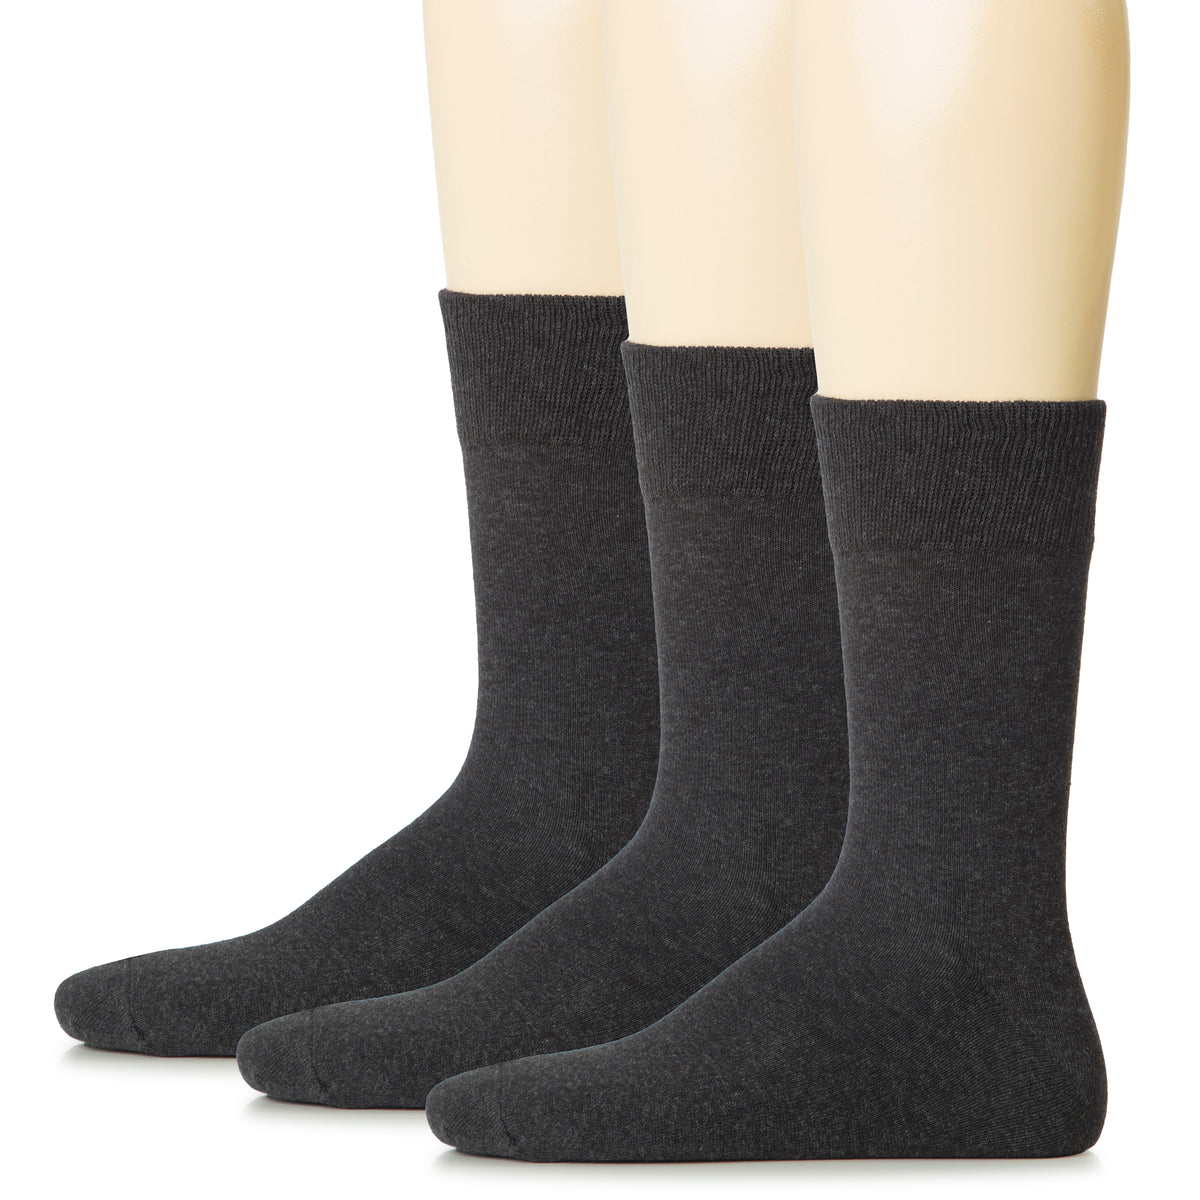 Hugh Ugoli Men Cotton Dress Socks XL / L / M / S Sizes, 3 Pairs | Shoe Size:10-13 | Chestnut